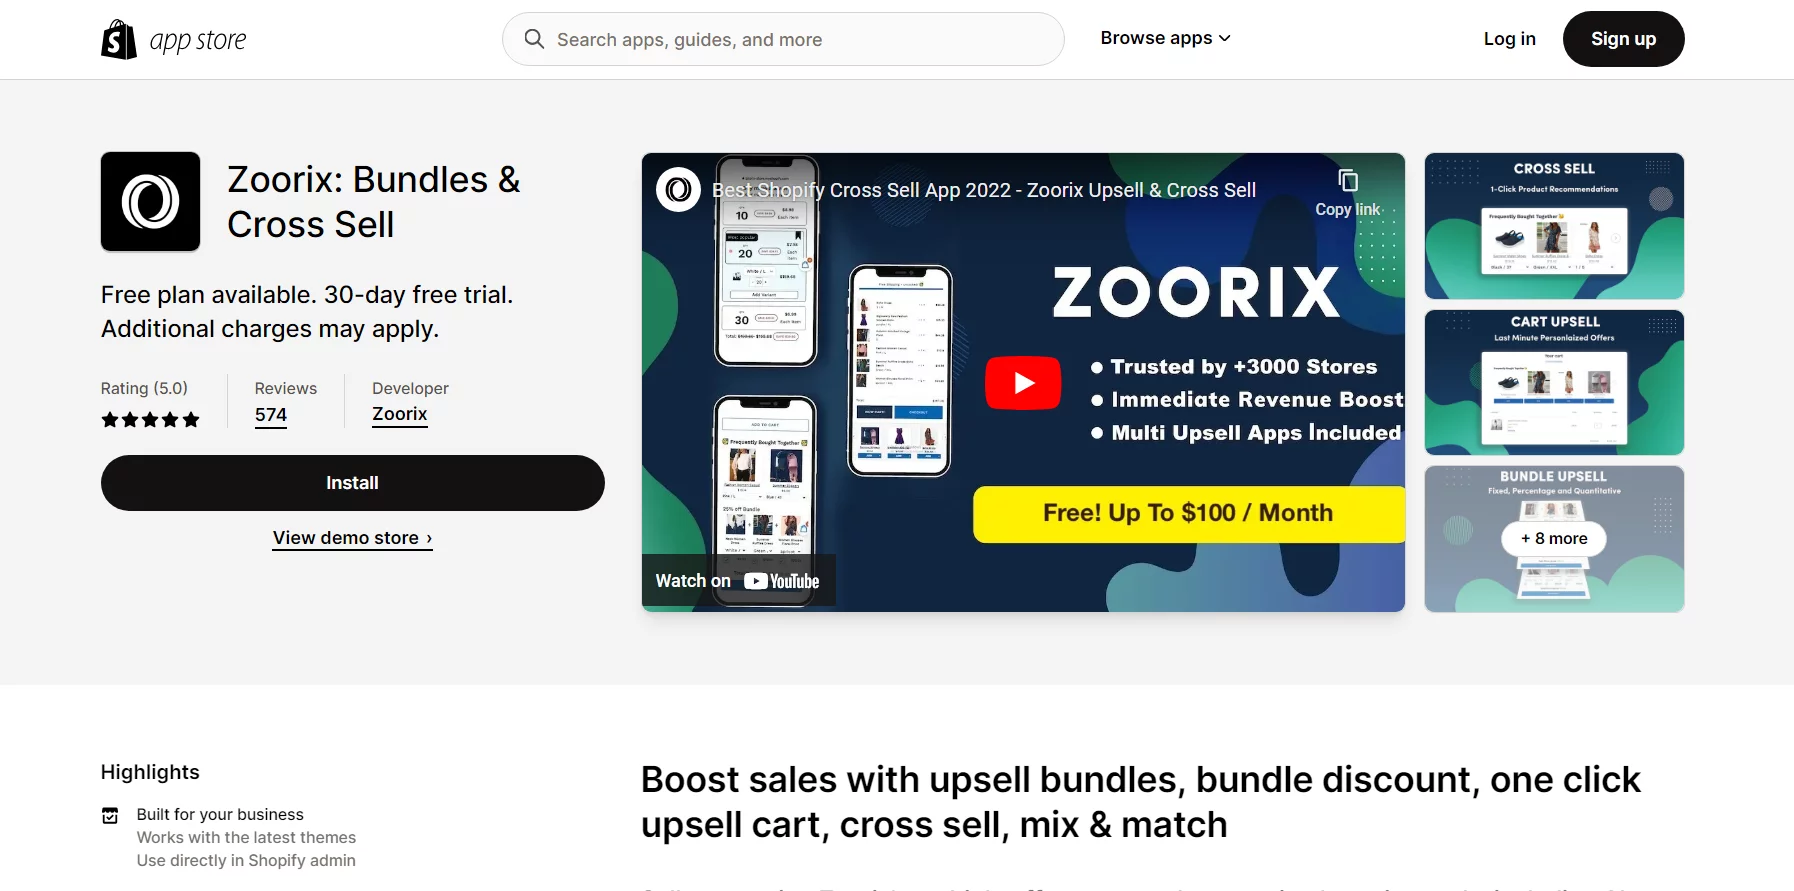 Zoorix: Bundles & Cross Sell